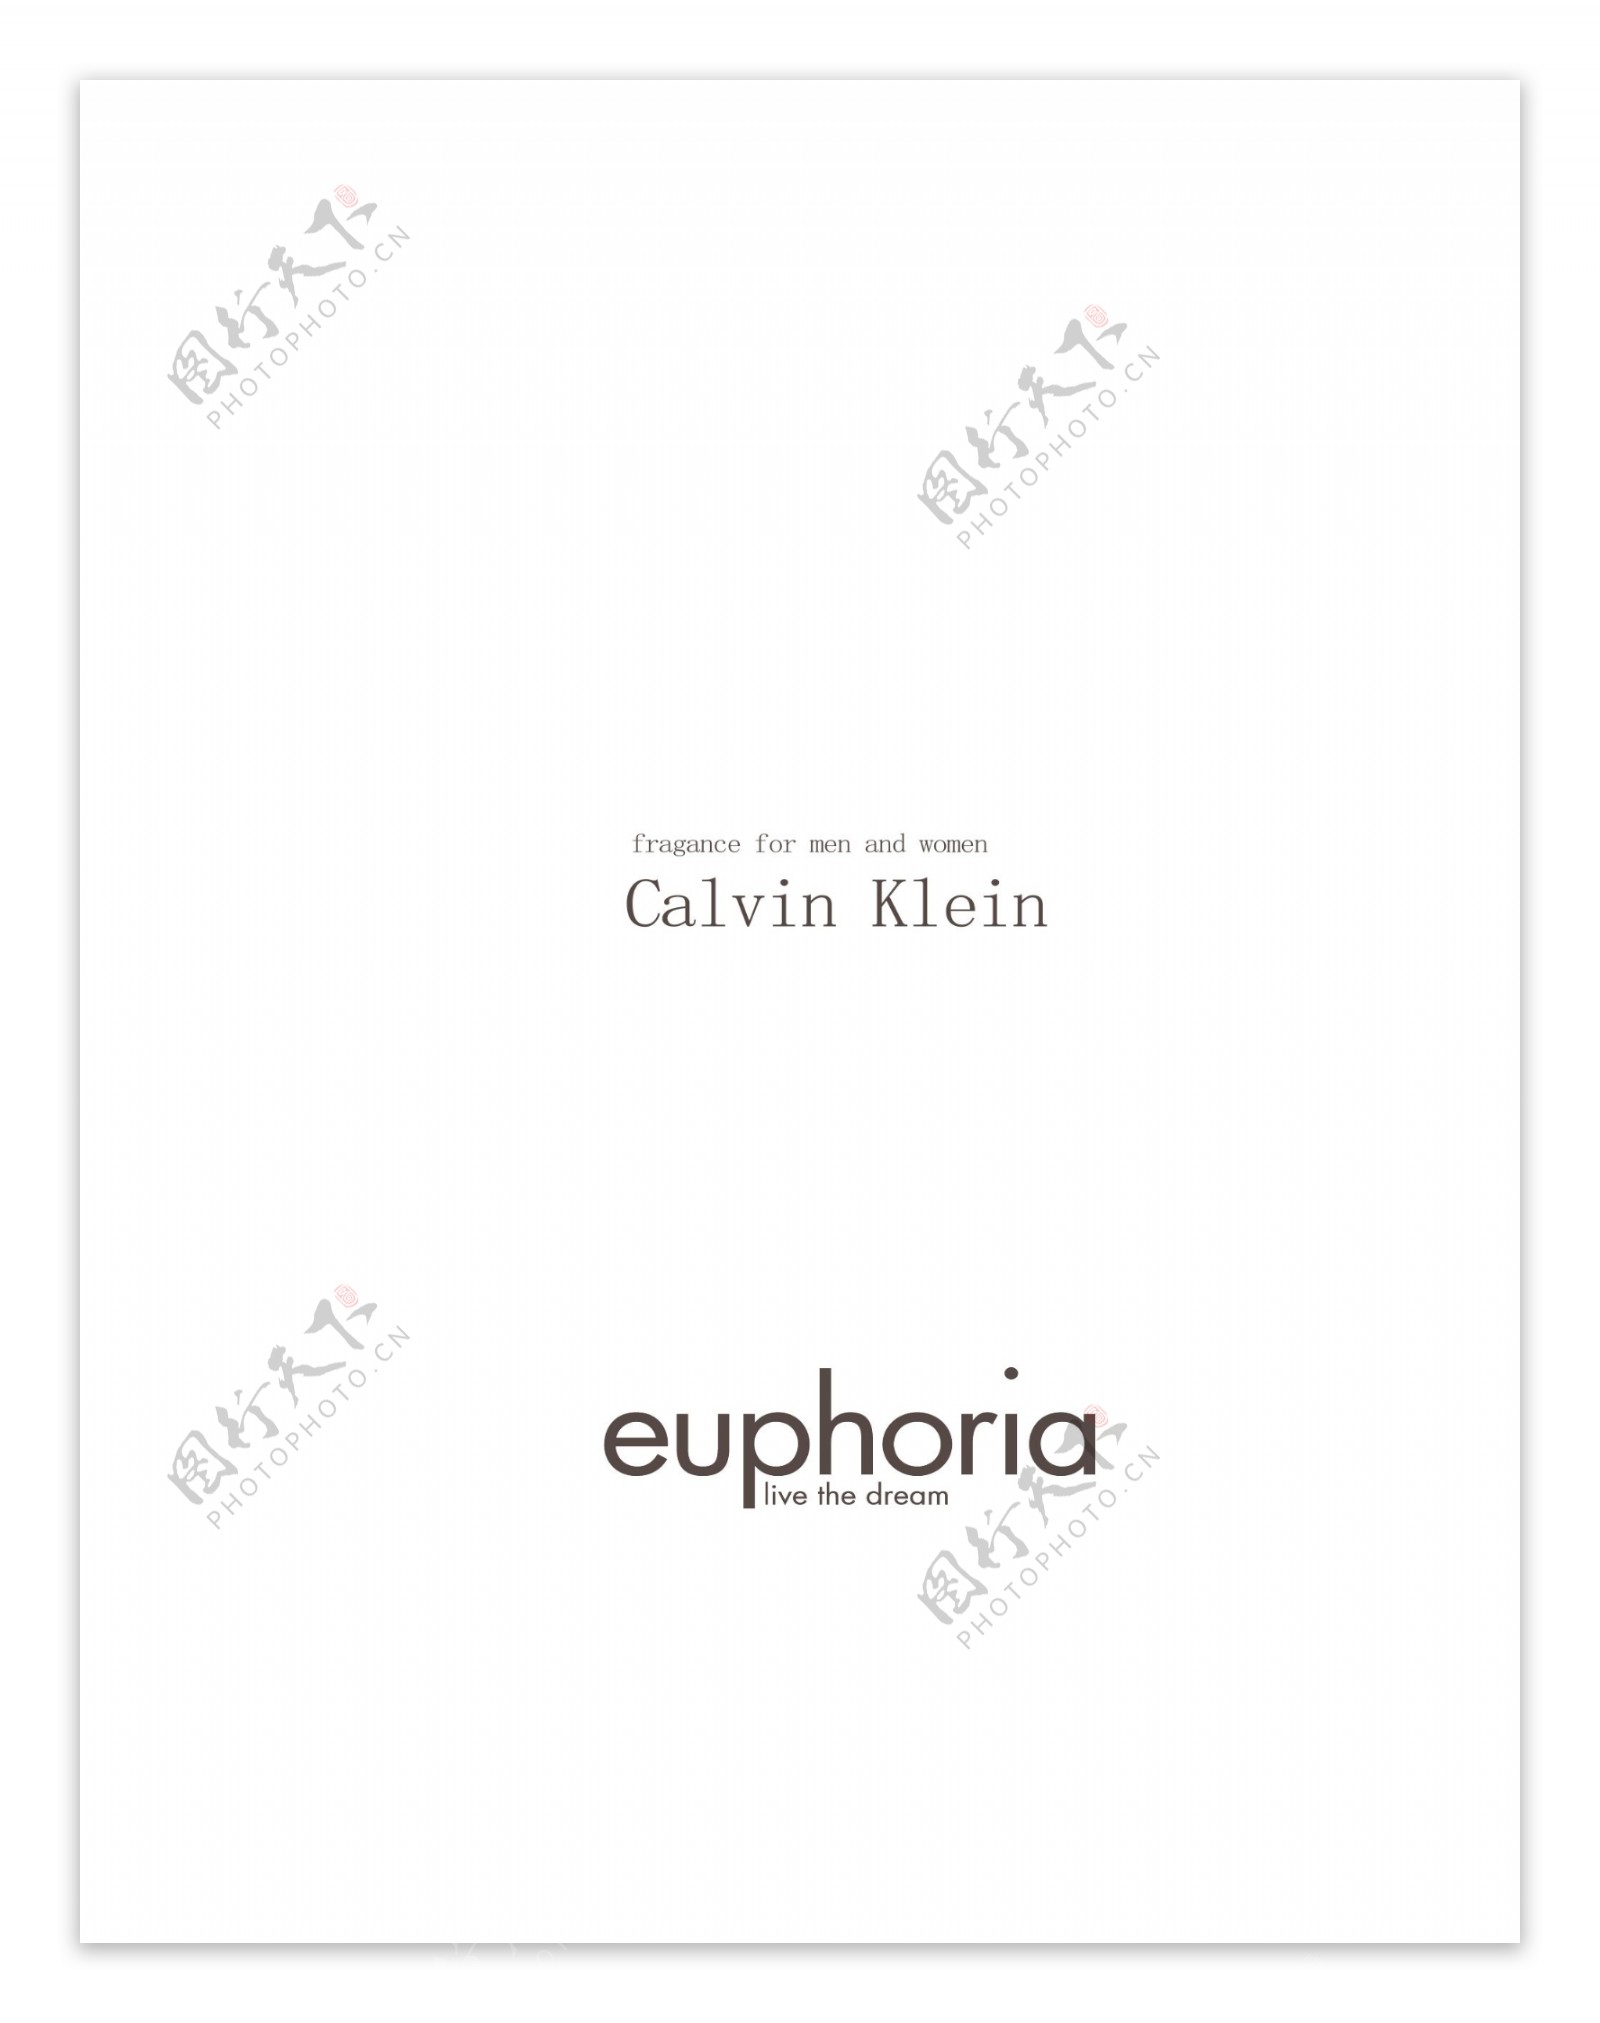 EuphoriaCalvinKleinlogo设计欣赏EuphoriaCalvinKlein化妆品标志下载标志设计欣赏